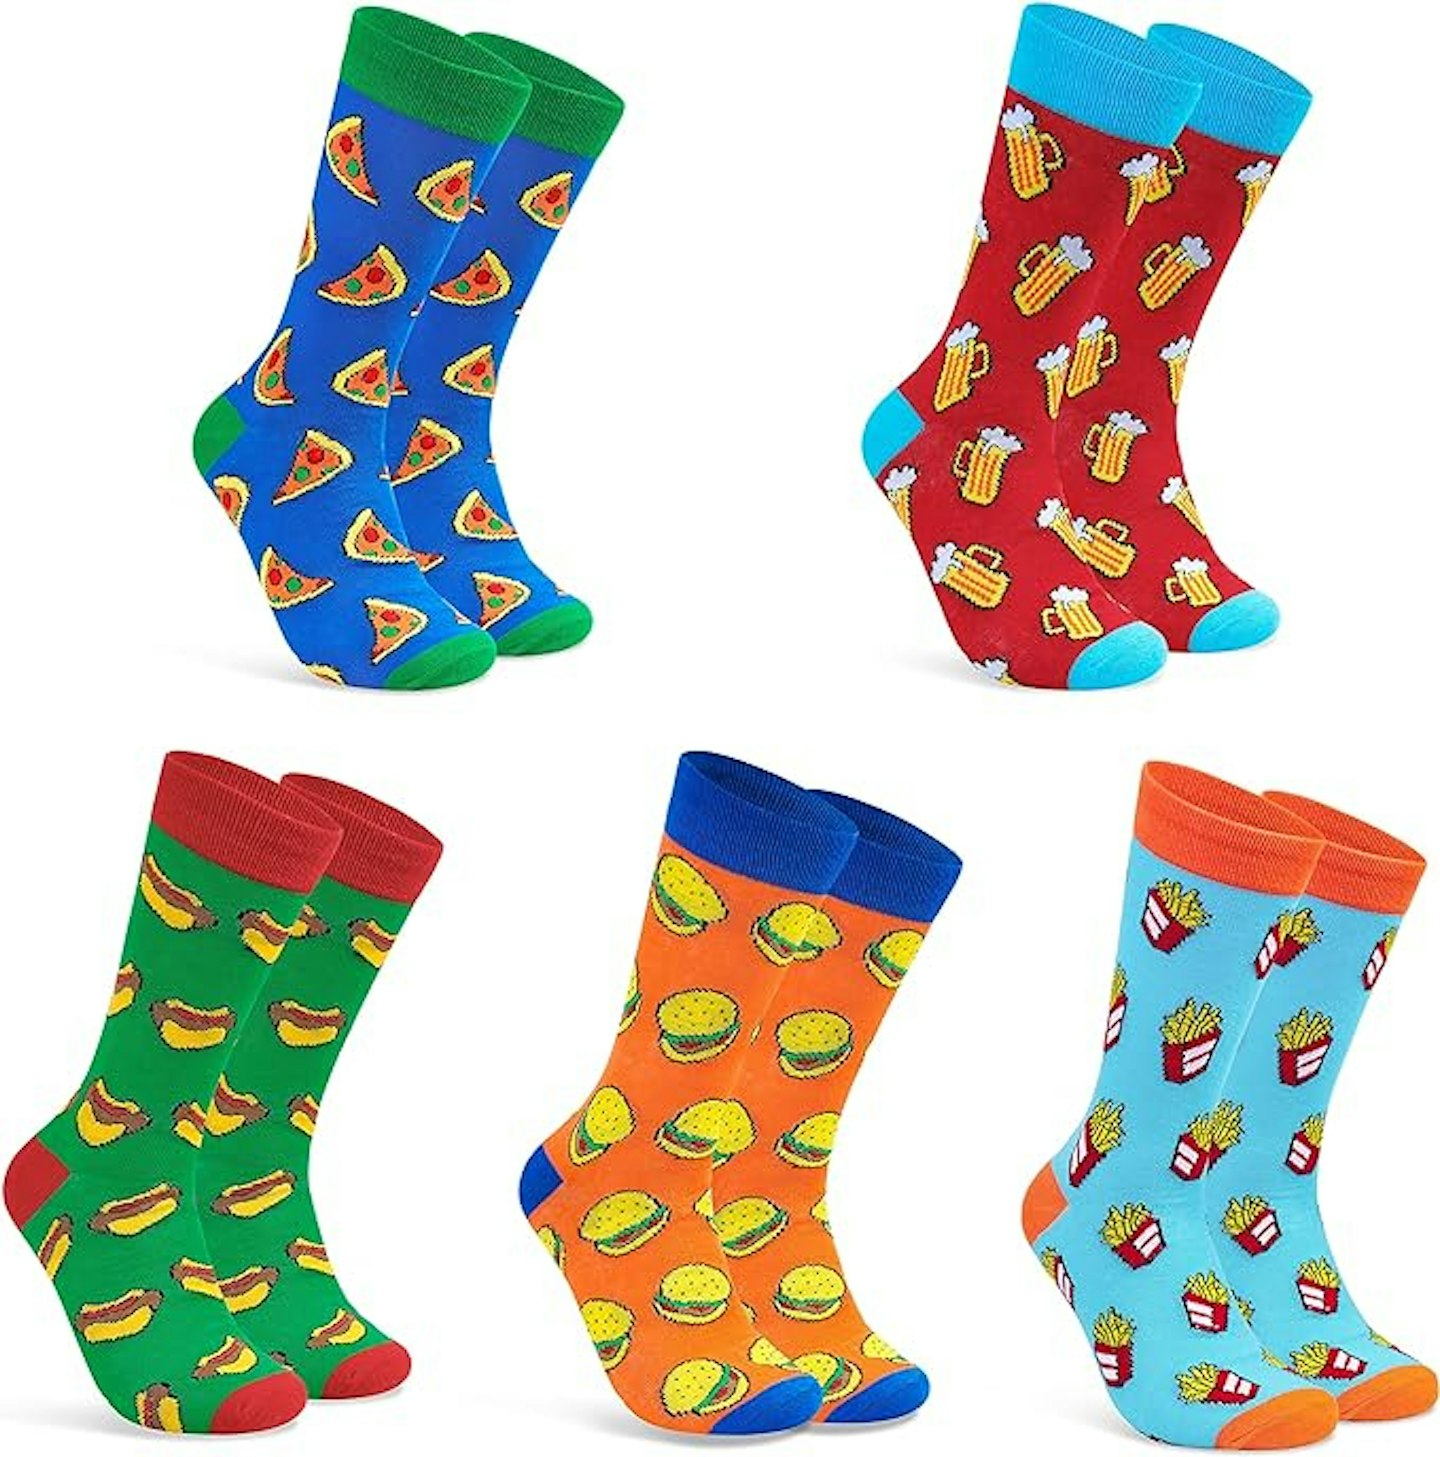 socks for dads 